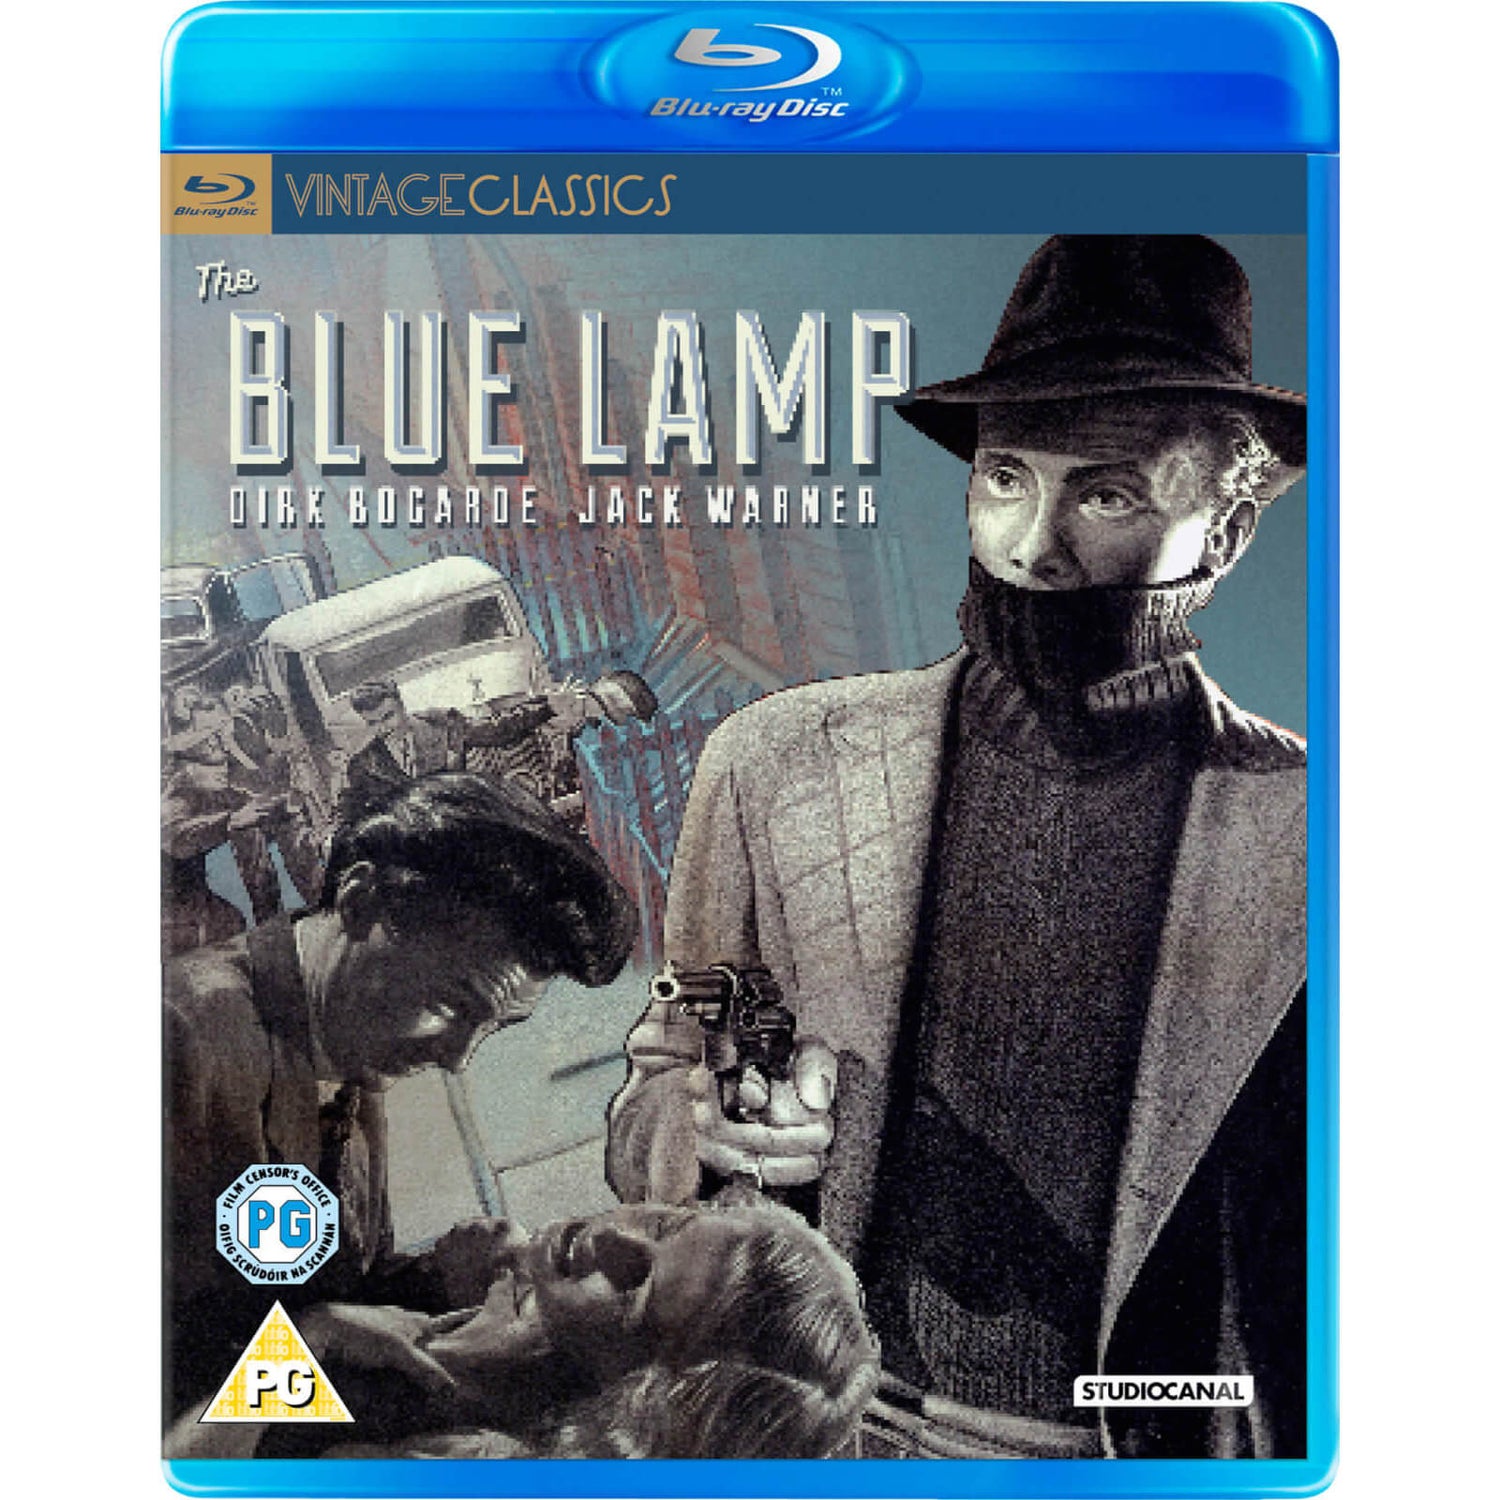 The Blue Lamp (Digitally Restored)